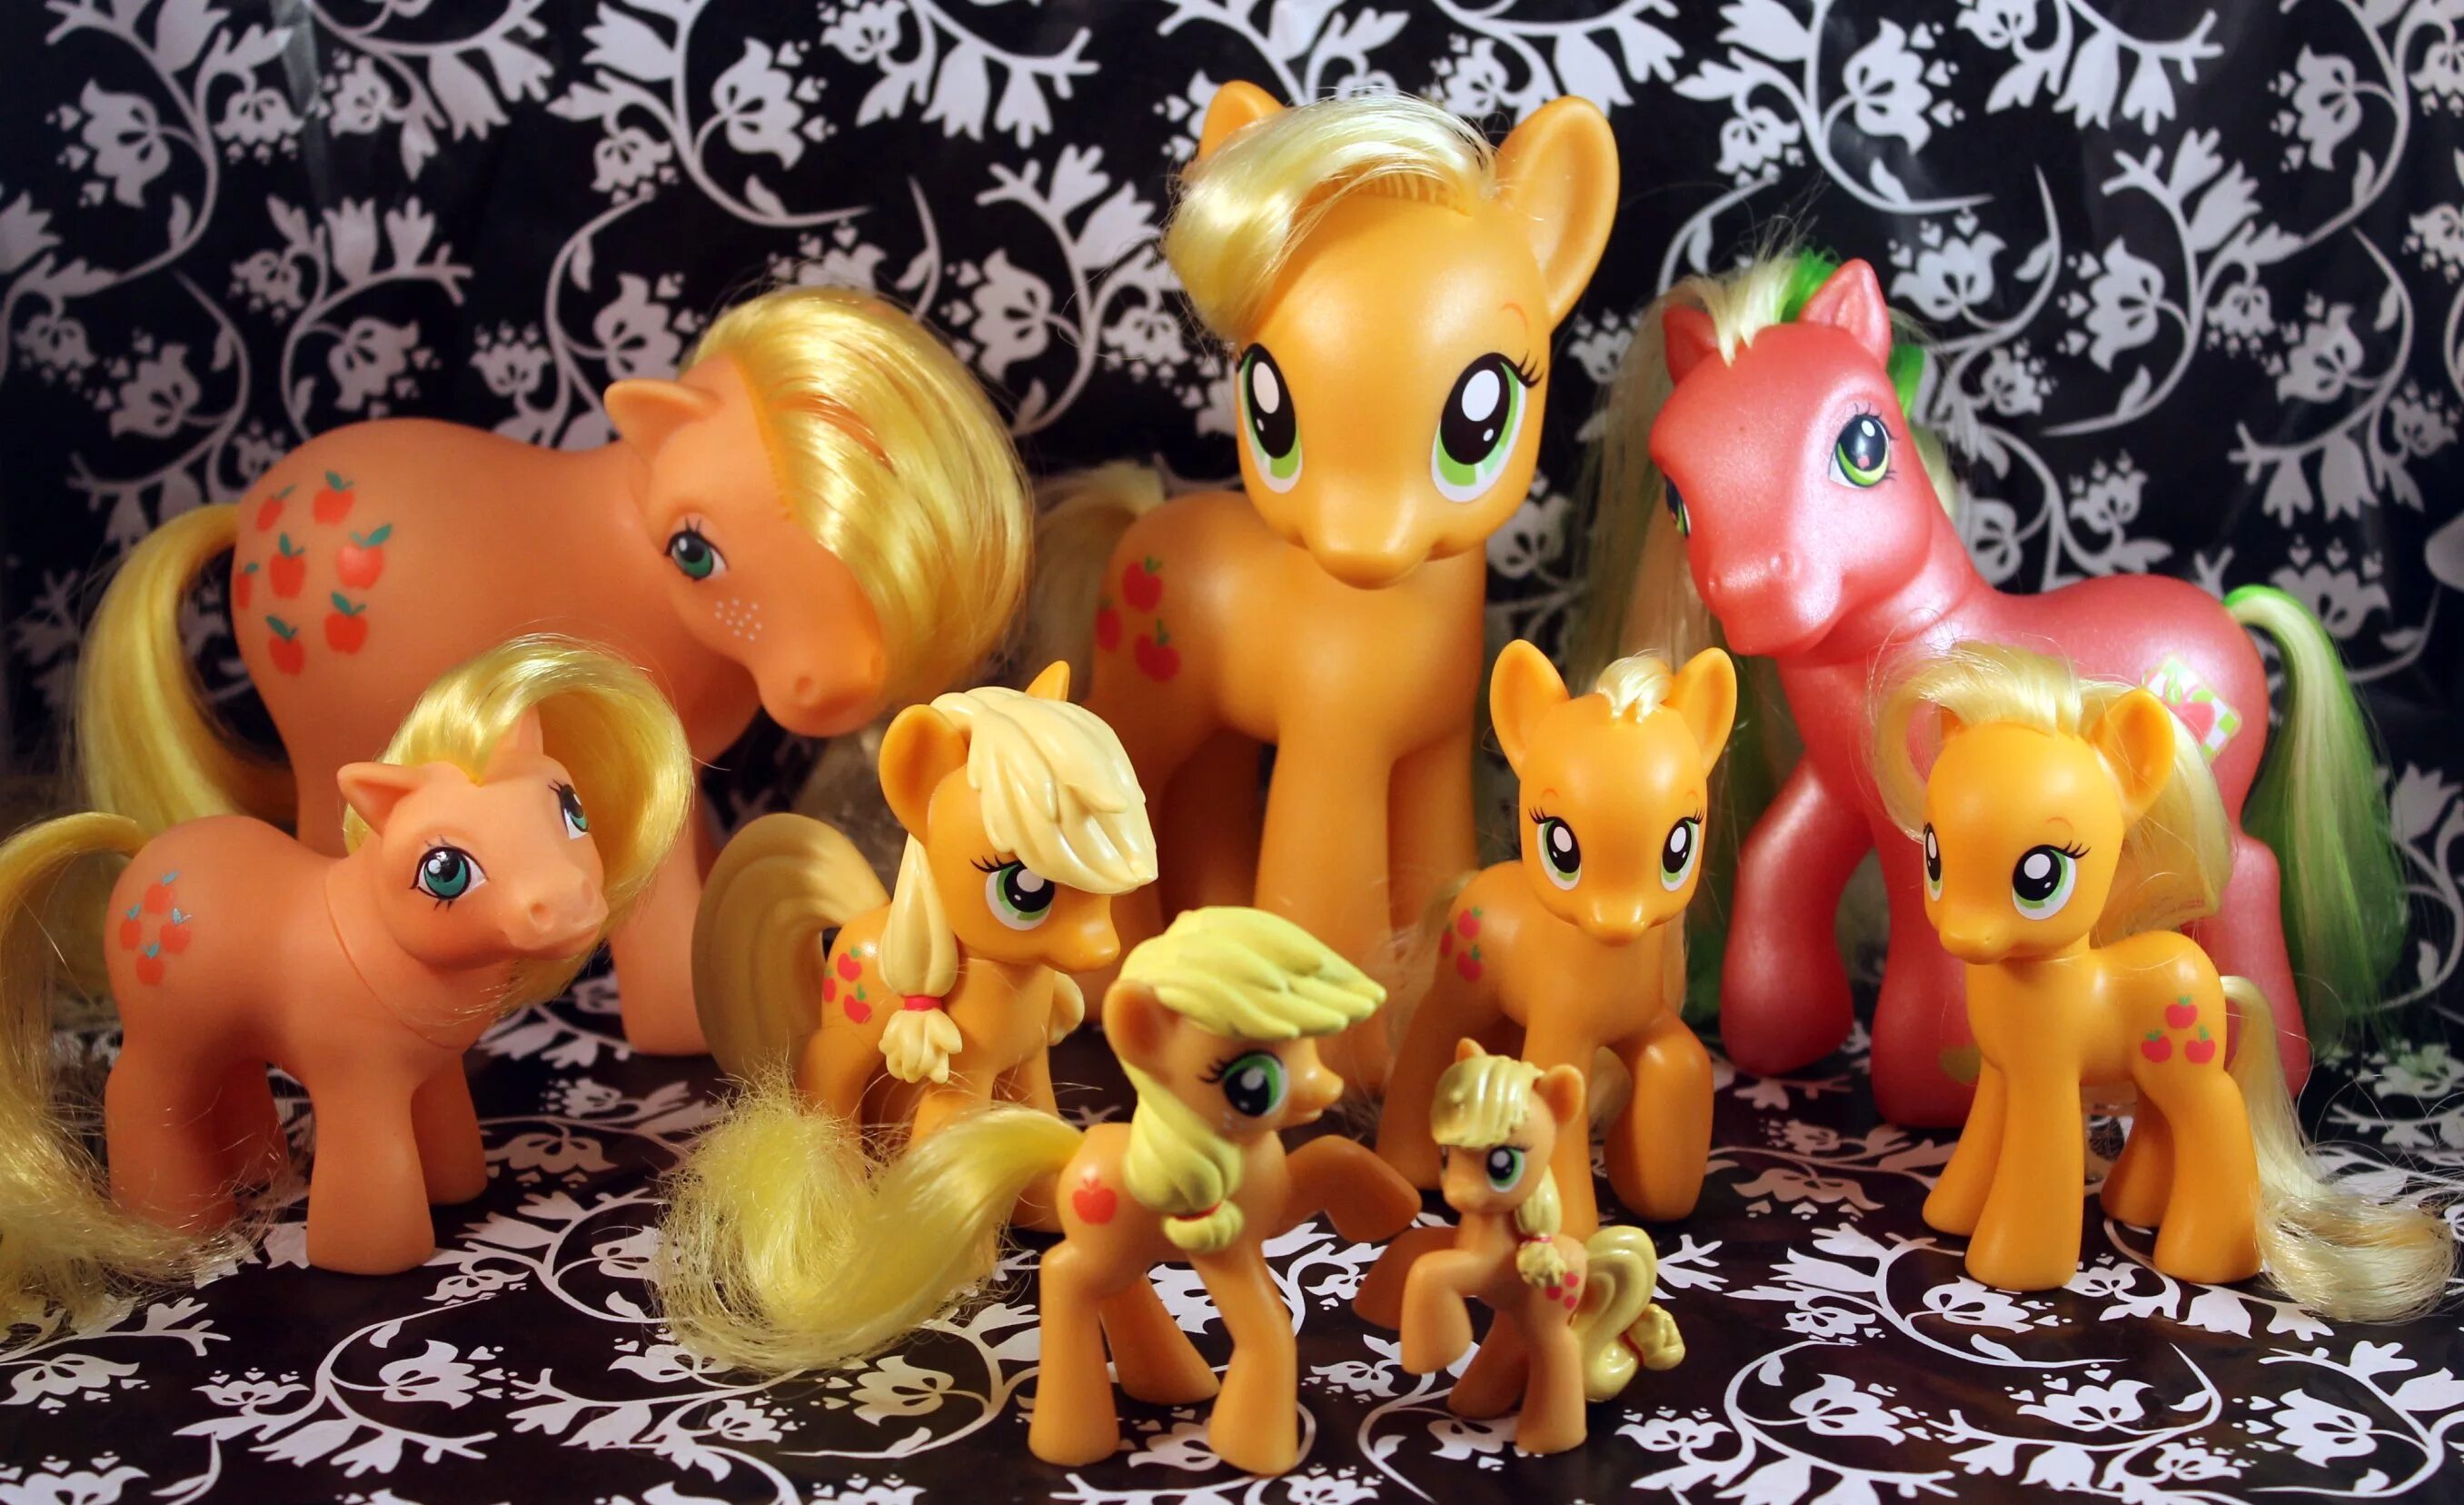 Коллекции литл пони. My little Pony игрушки Эпплджек. Пони 5 поколение Эпплджек. Эпплджек игрушка пони Hasbro 2010. My little Pony 1 поколение игрушки.